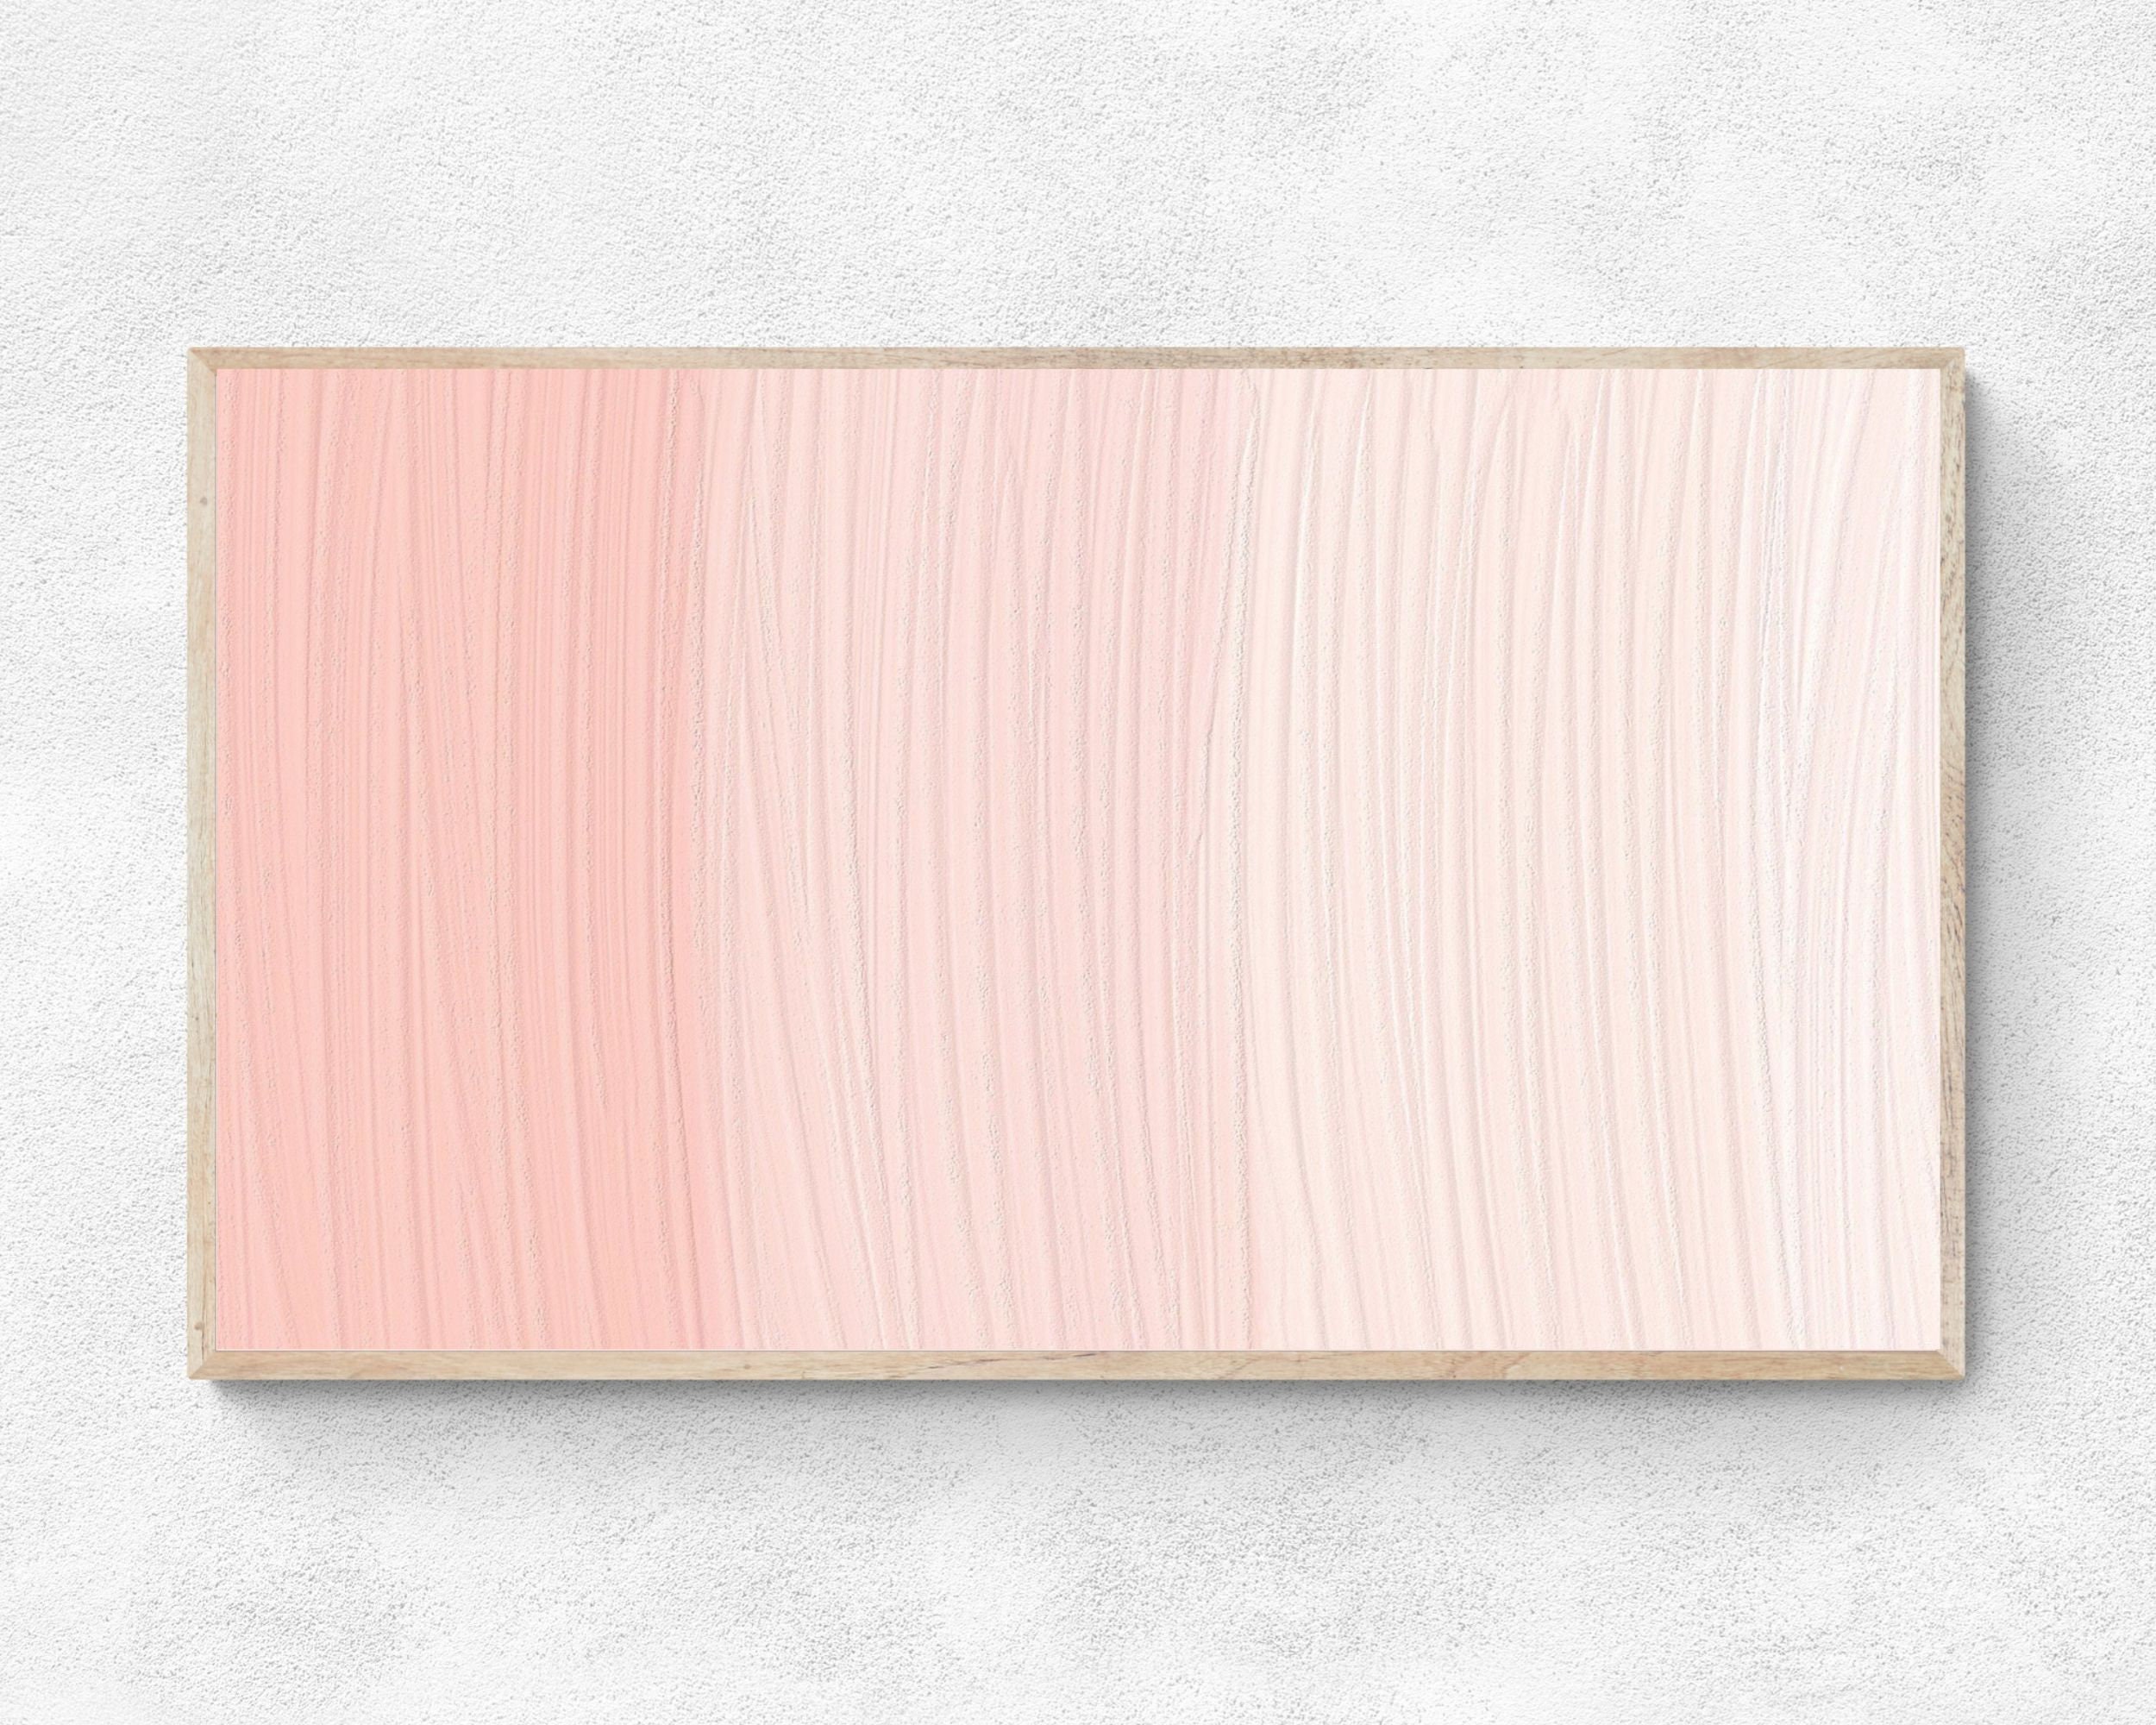 Pink Salmon Procreate Palette, 30 HEX Color Codes, Instant Digital